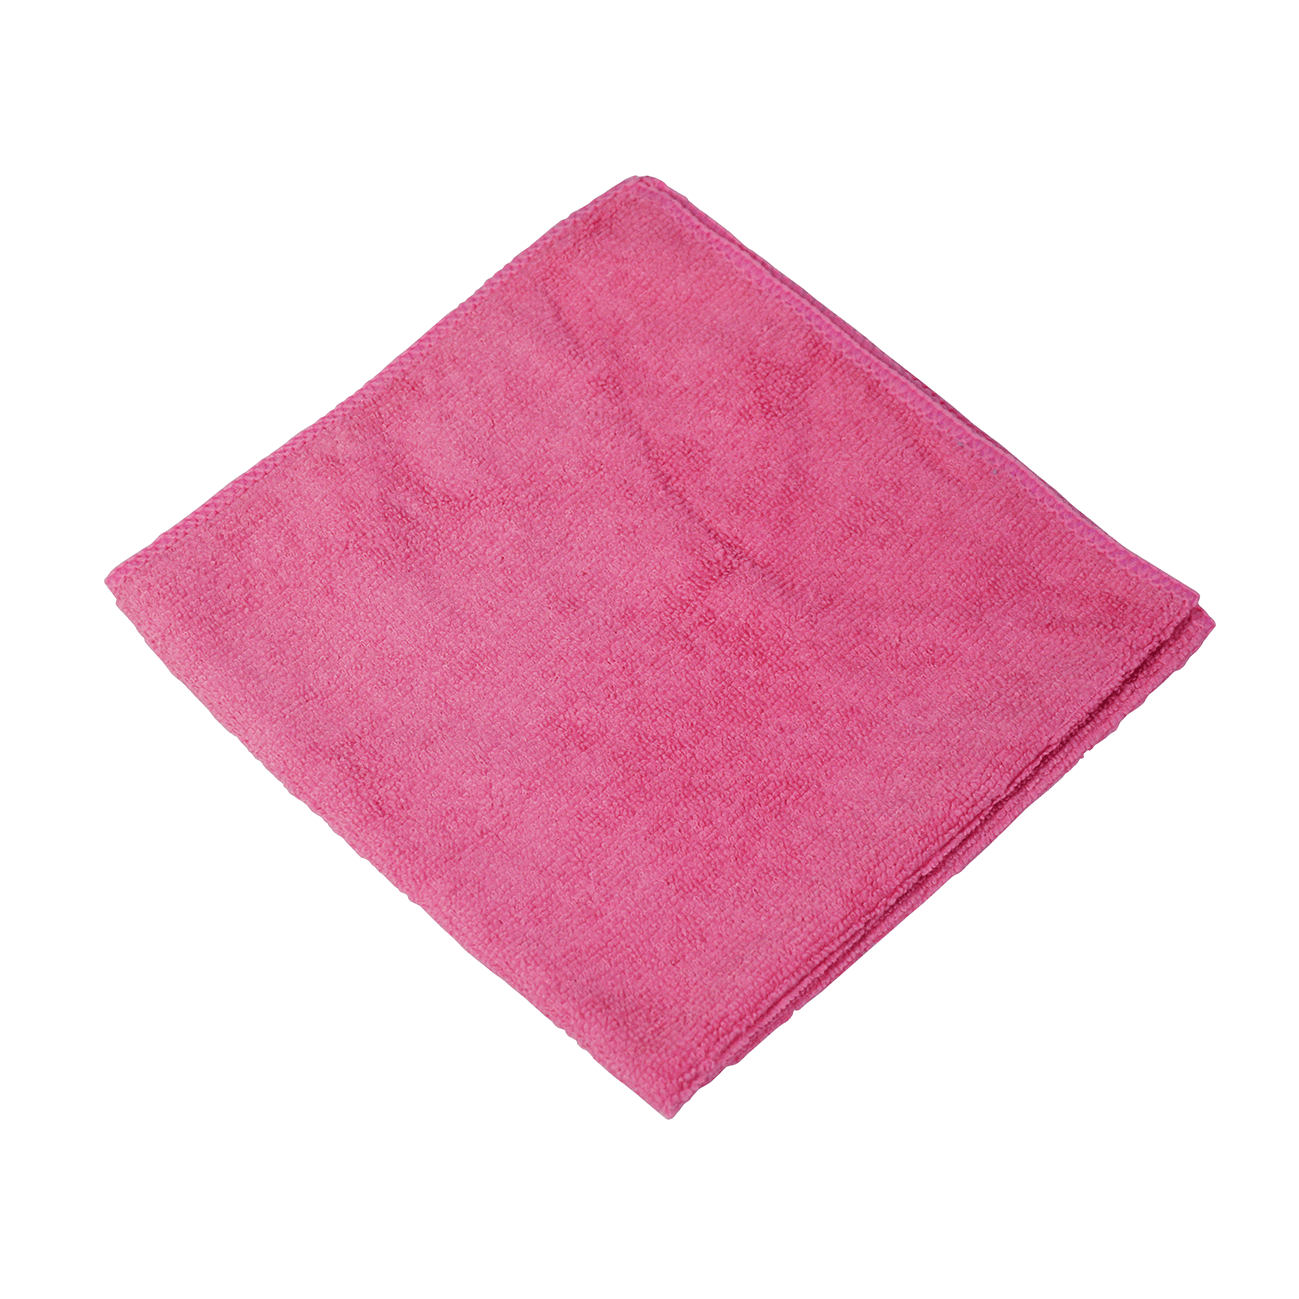 Laveta universala din microfibra 30 x 30 cm rosu